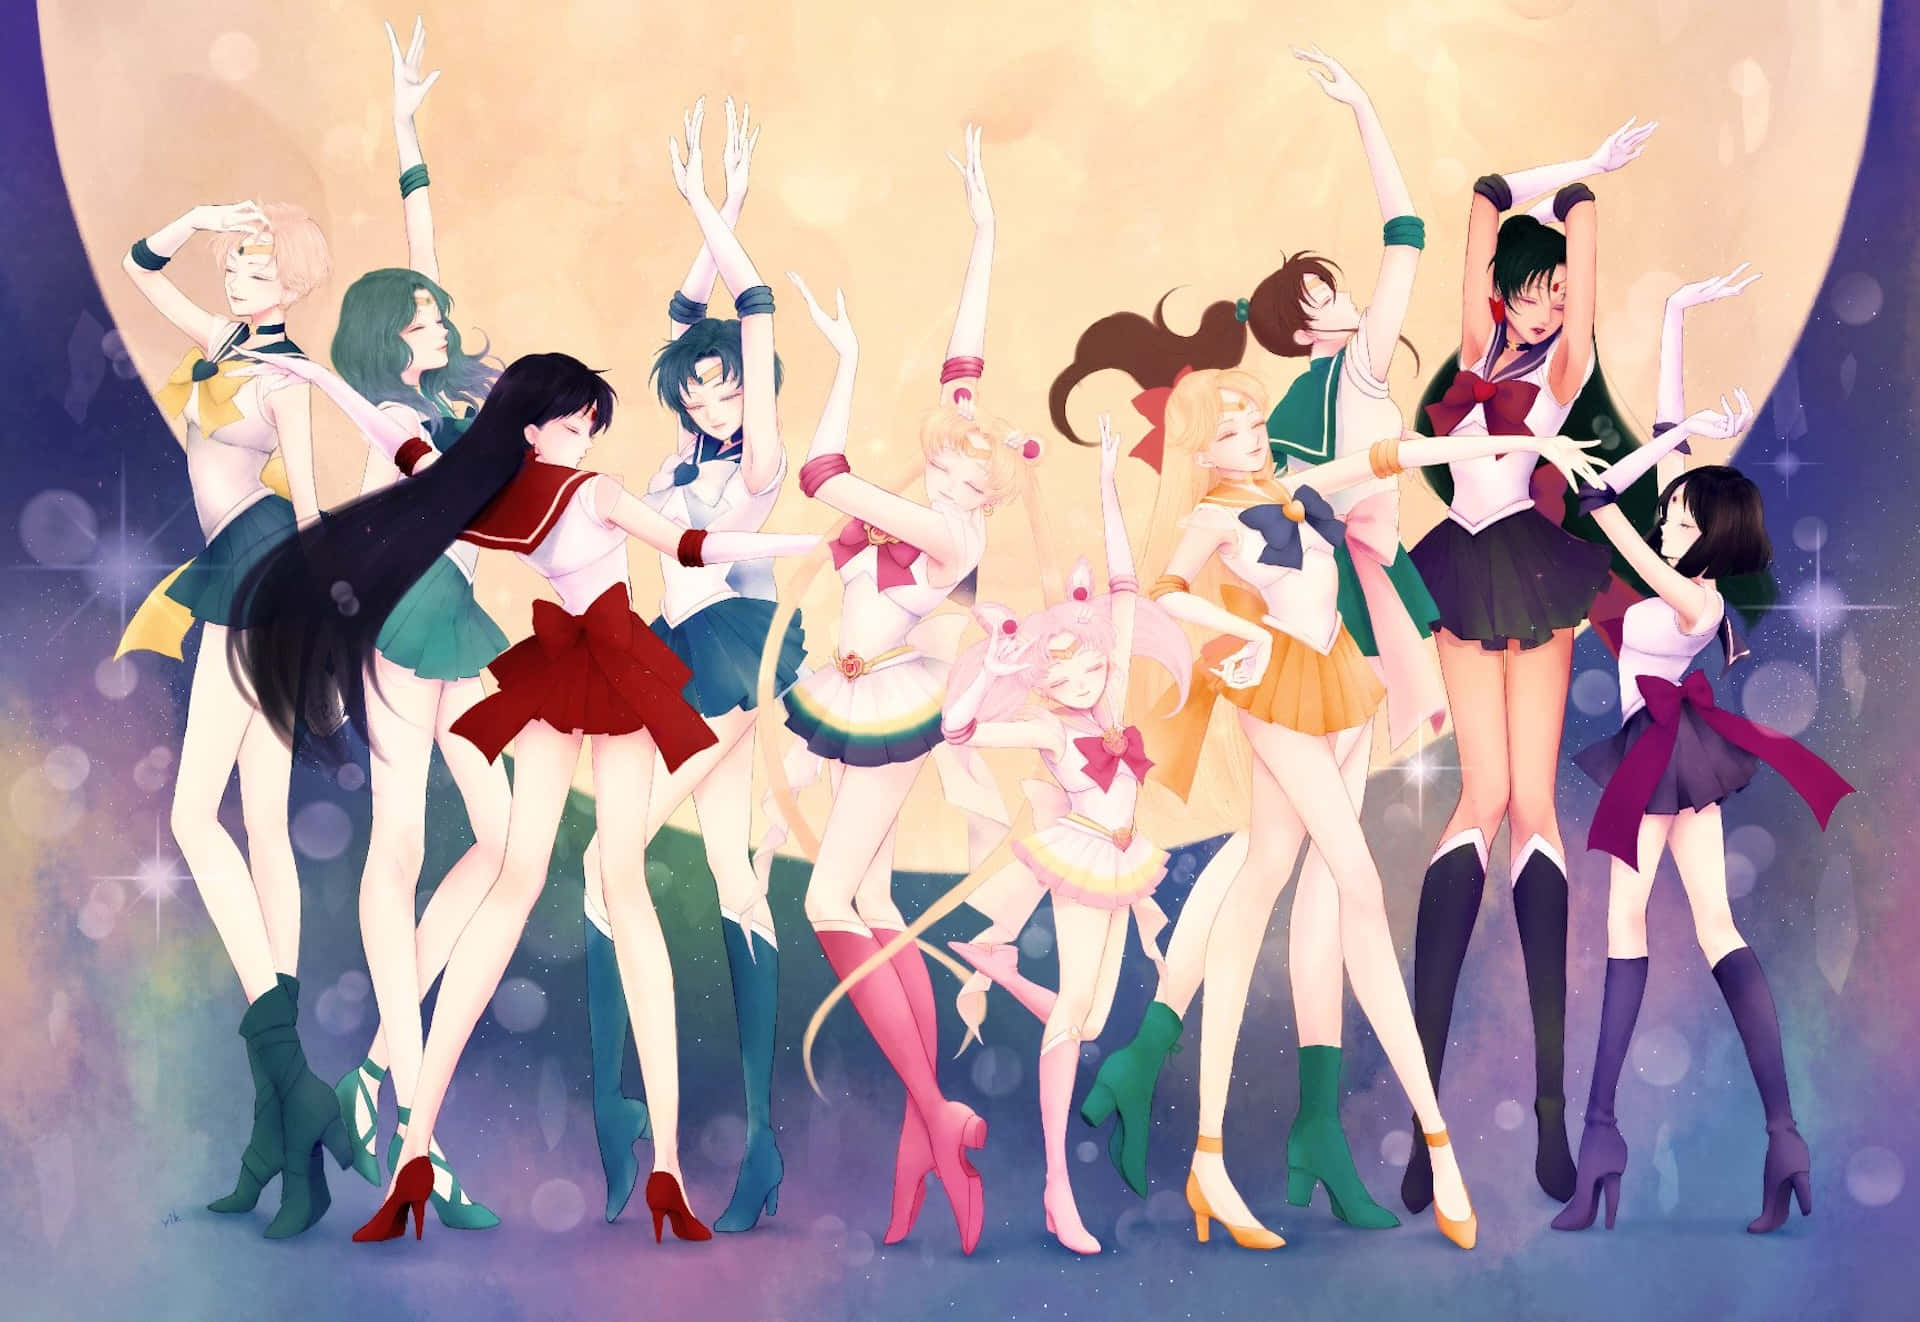 Sailor Moon Group Pose Artwork Wallpaper